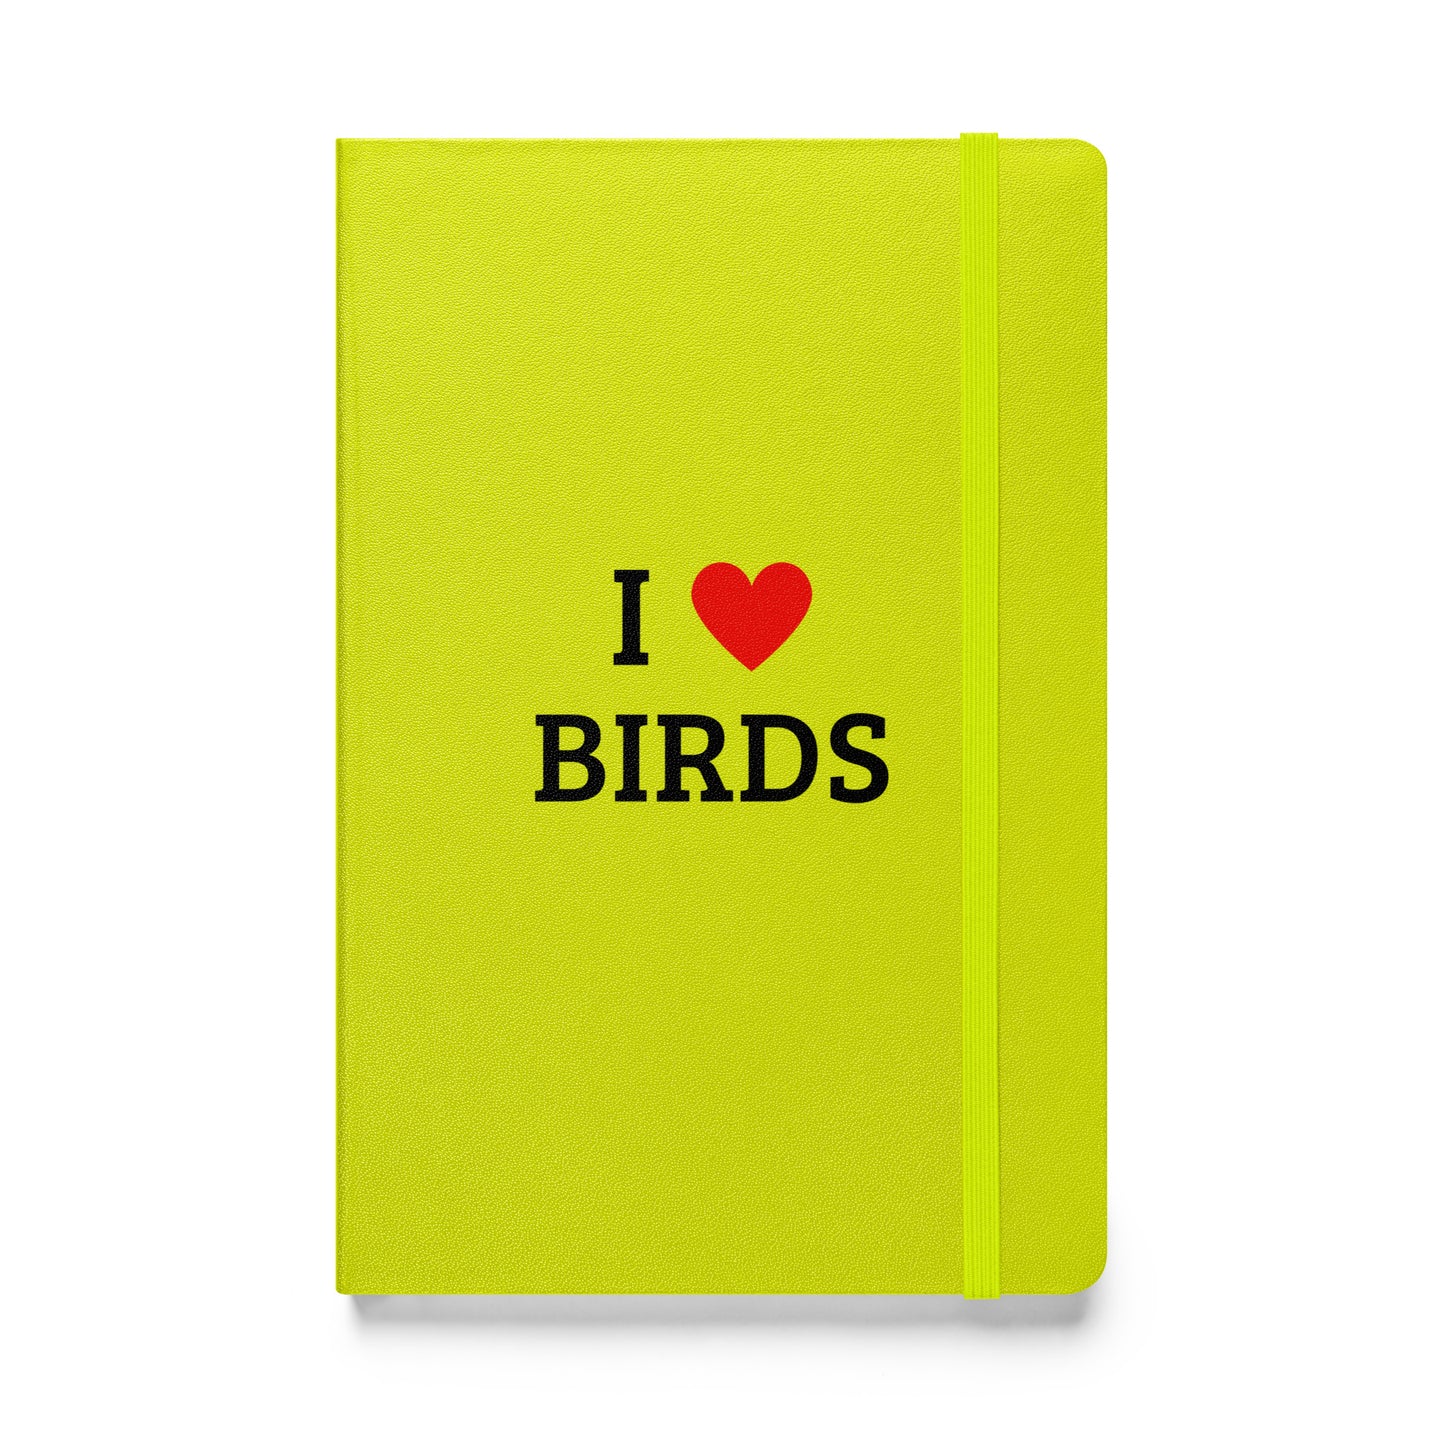 I Love Birds Journal